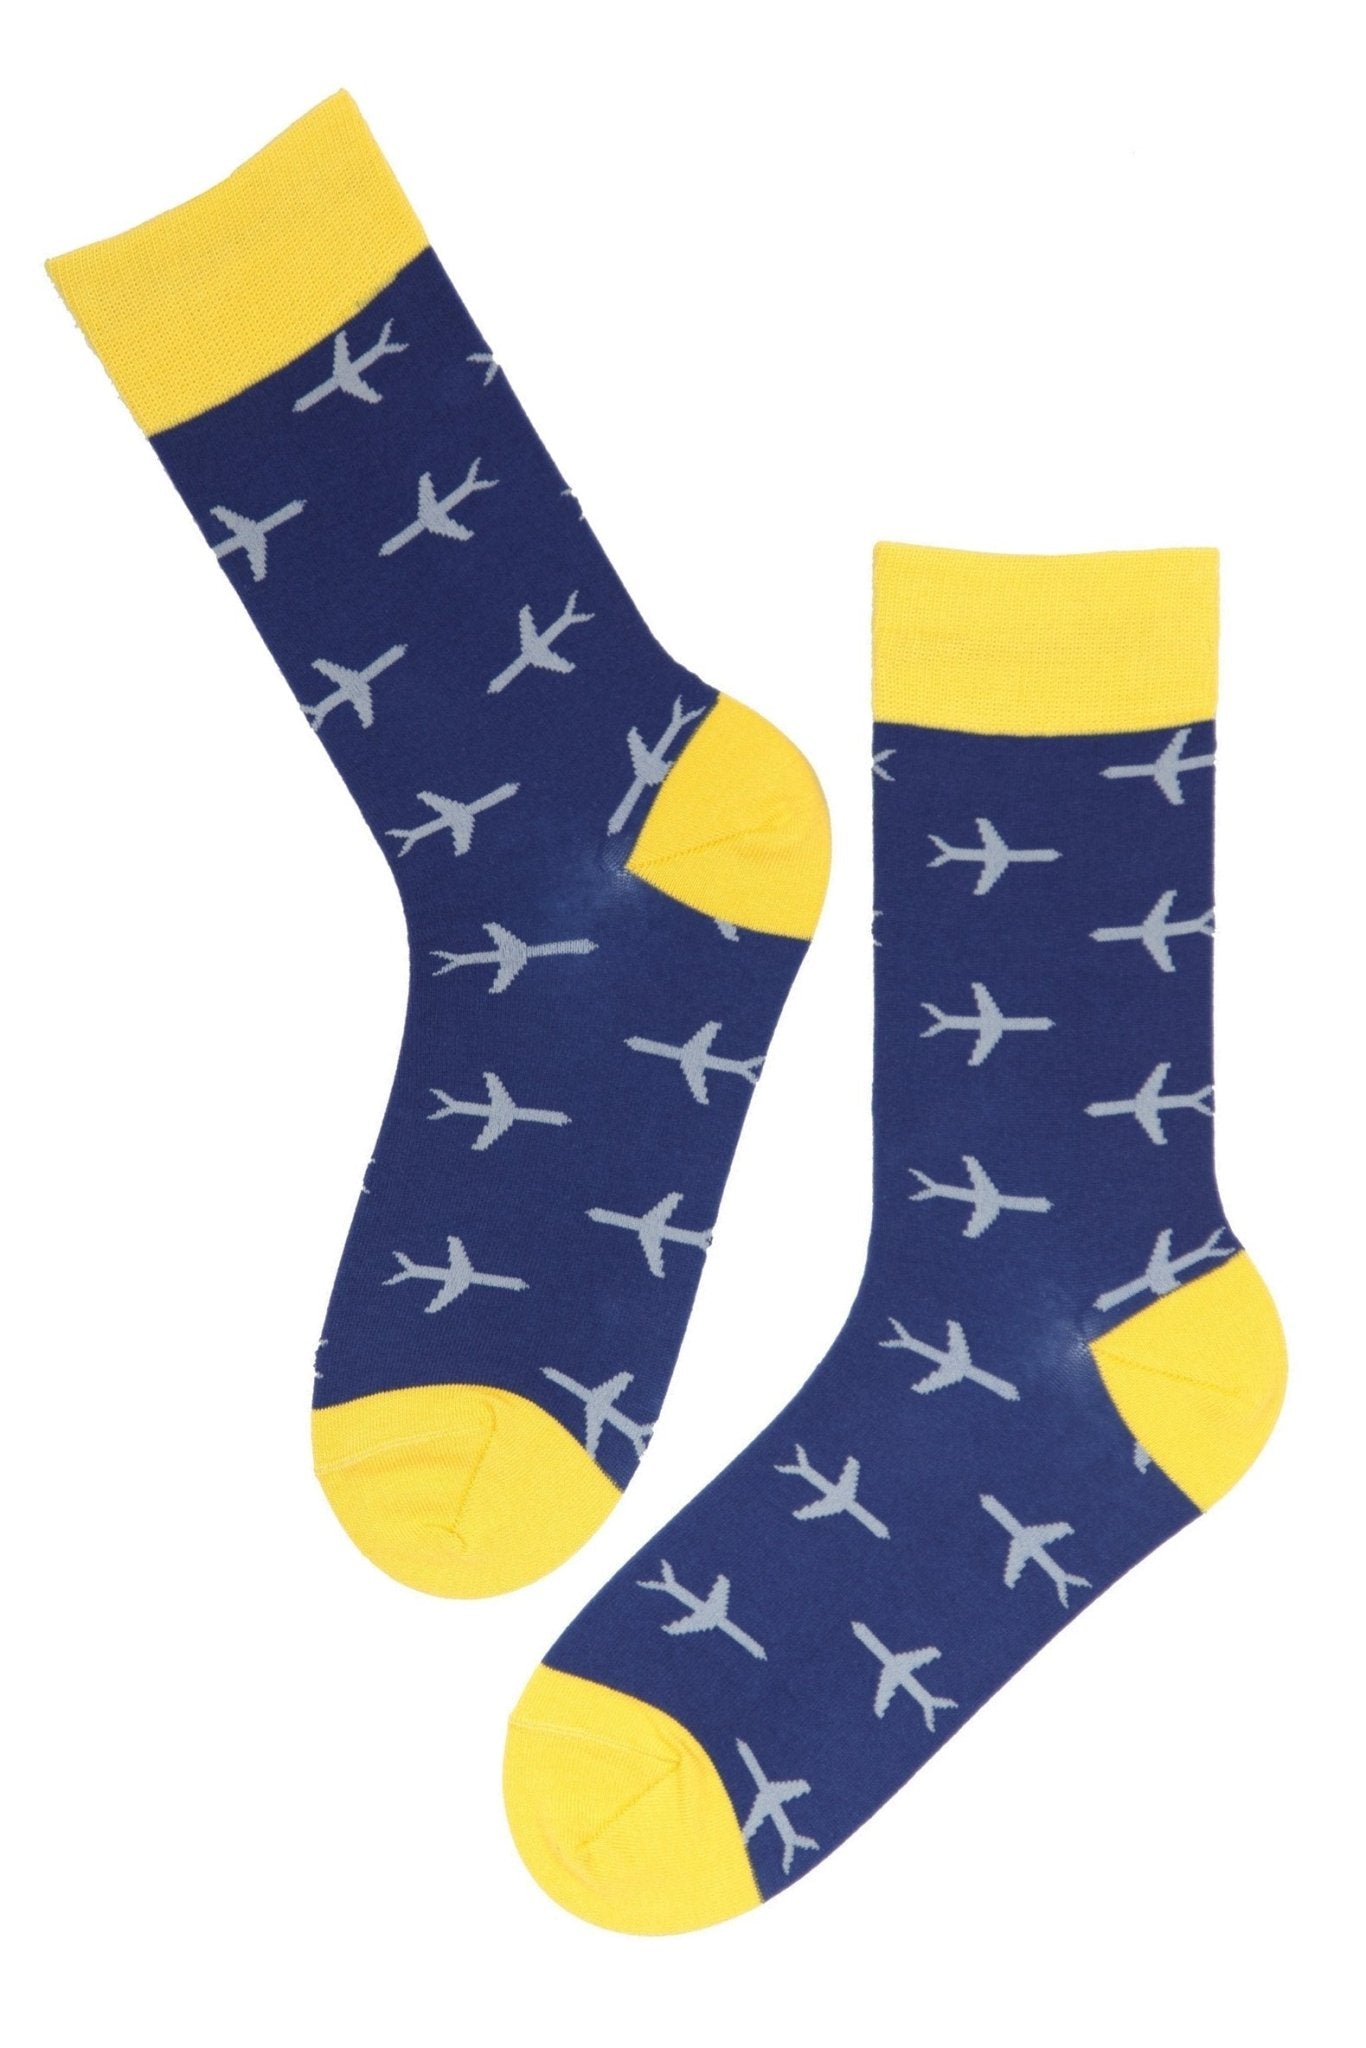 FLIGHT blue cotton socks for men and women - Kind Designs